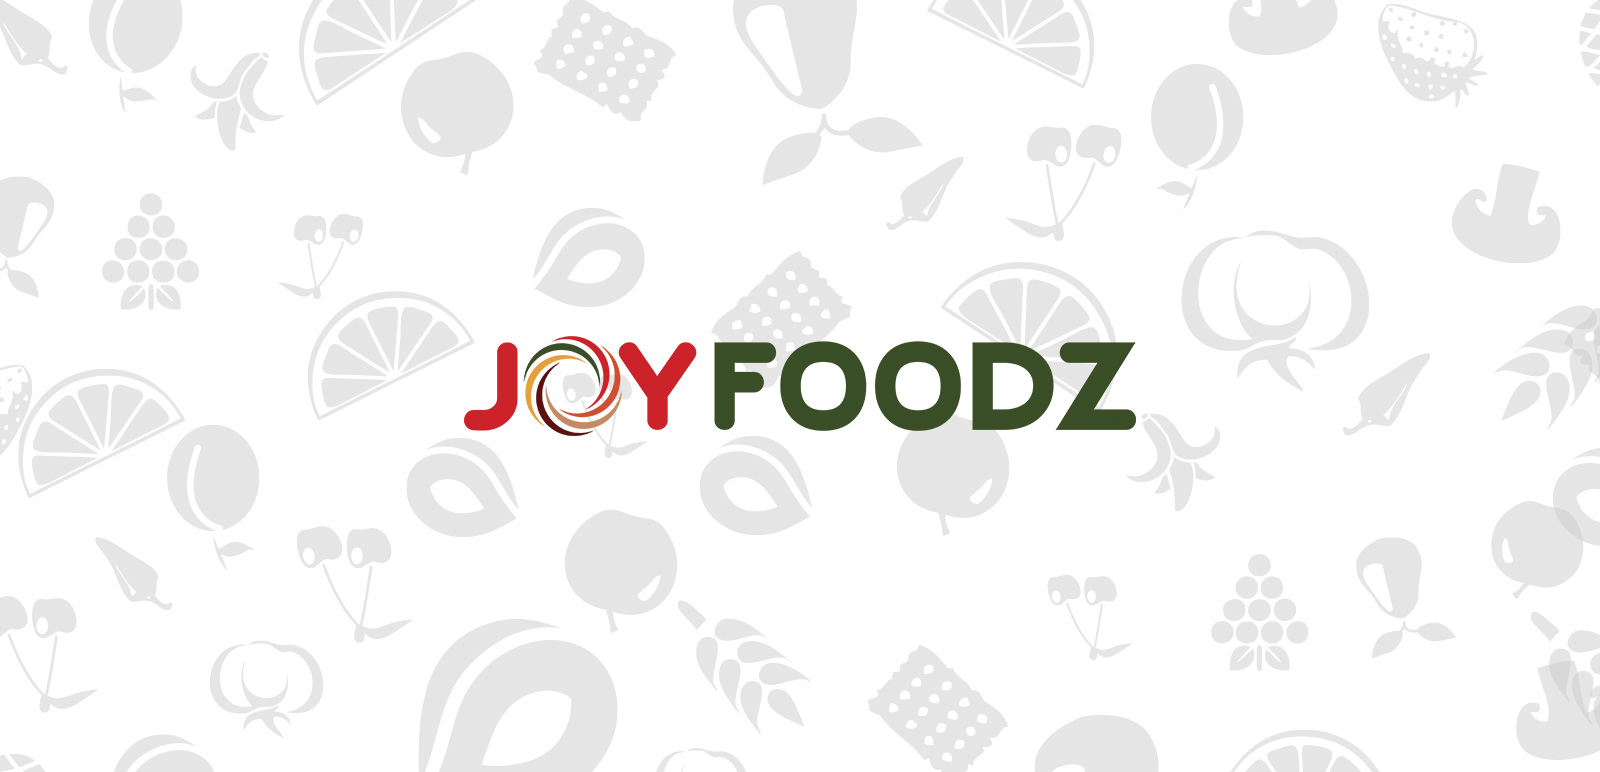 Joyfooz Logo, Corporate Identity 1